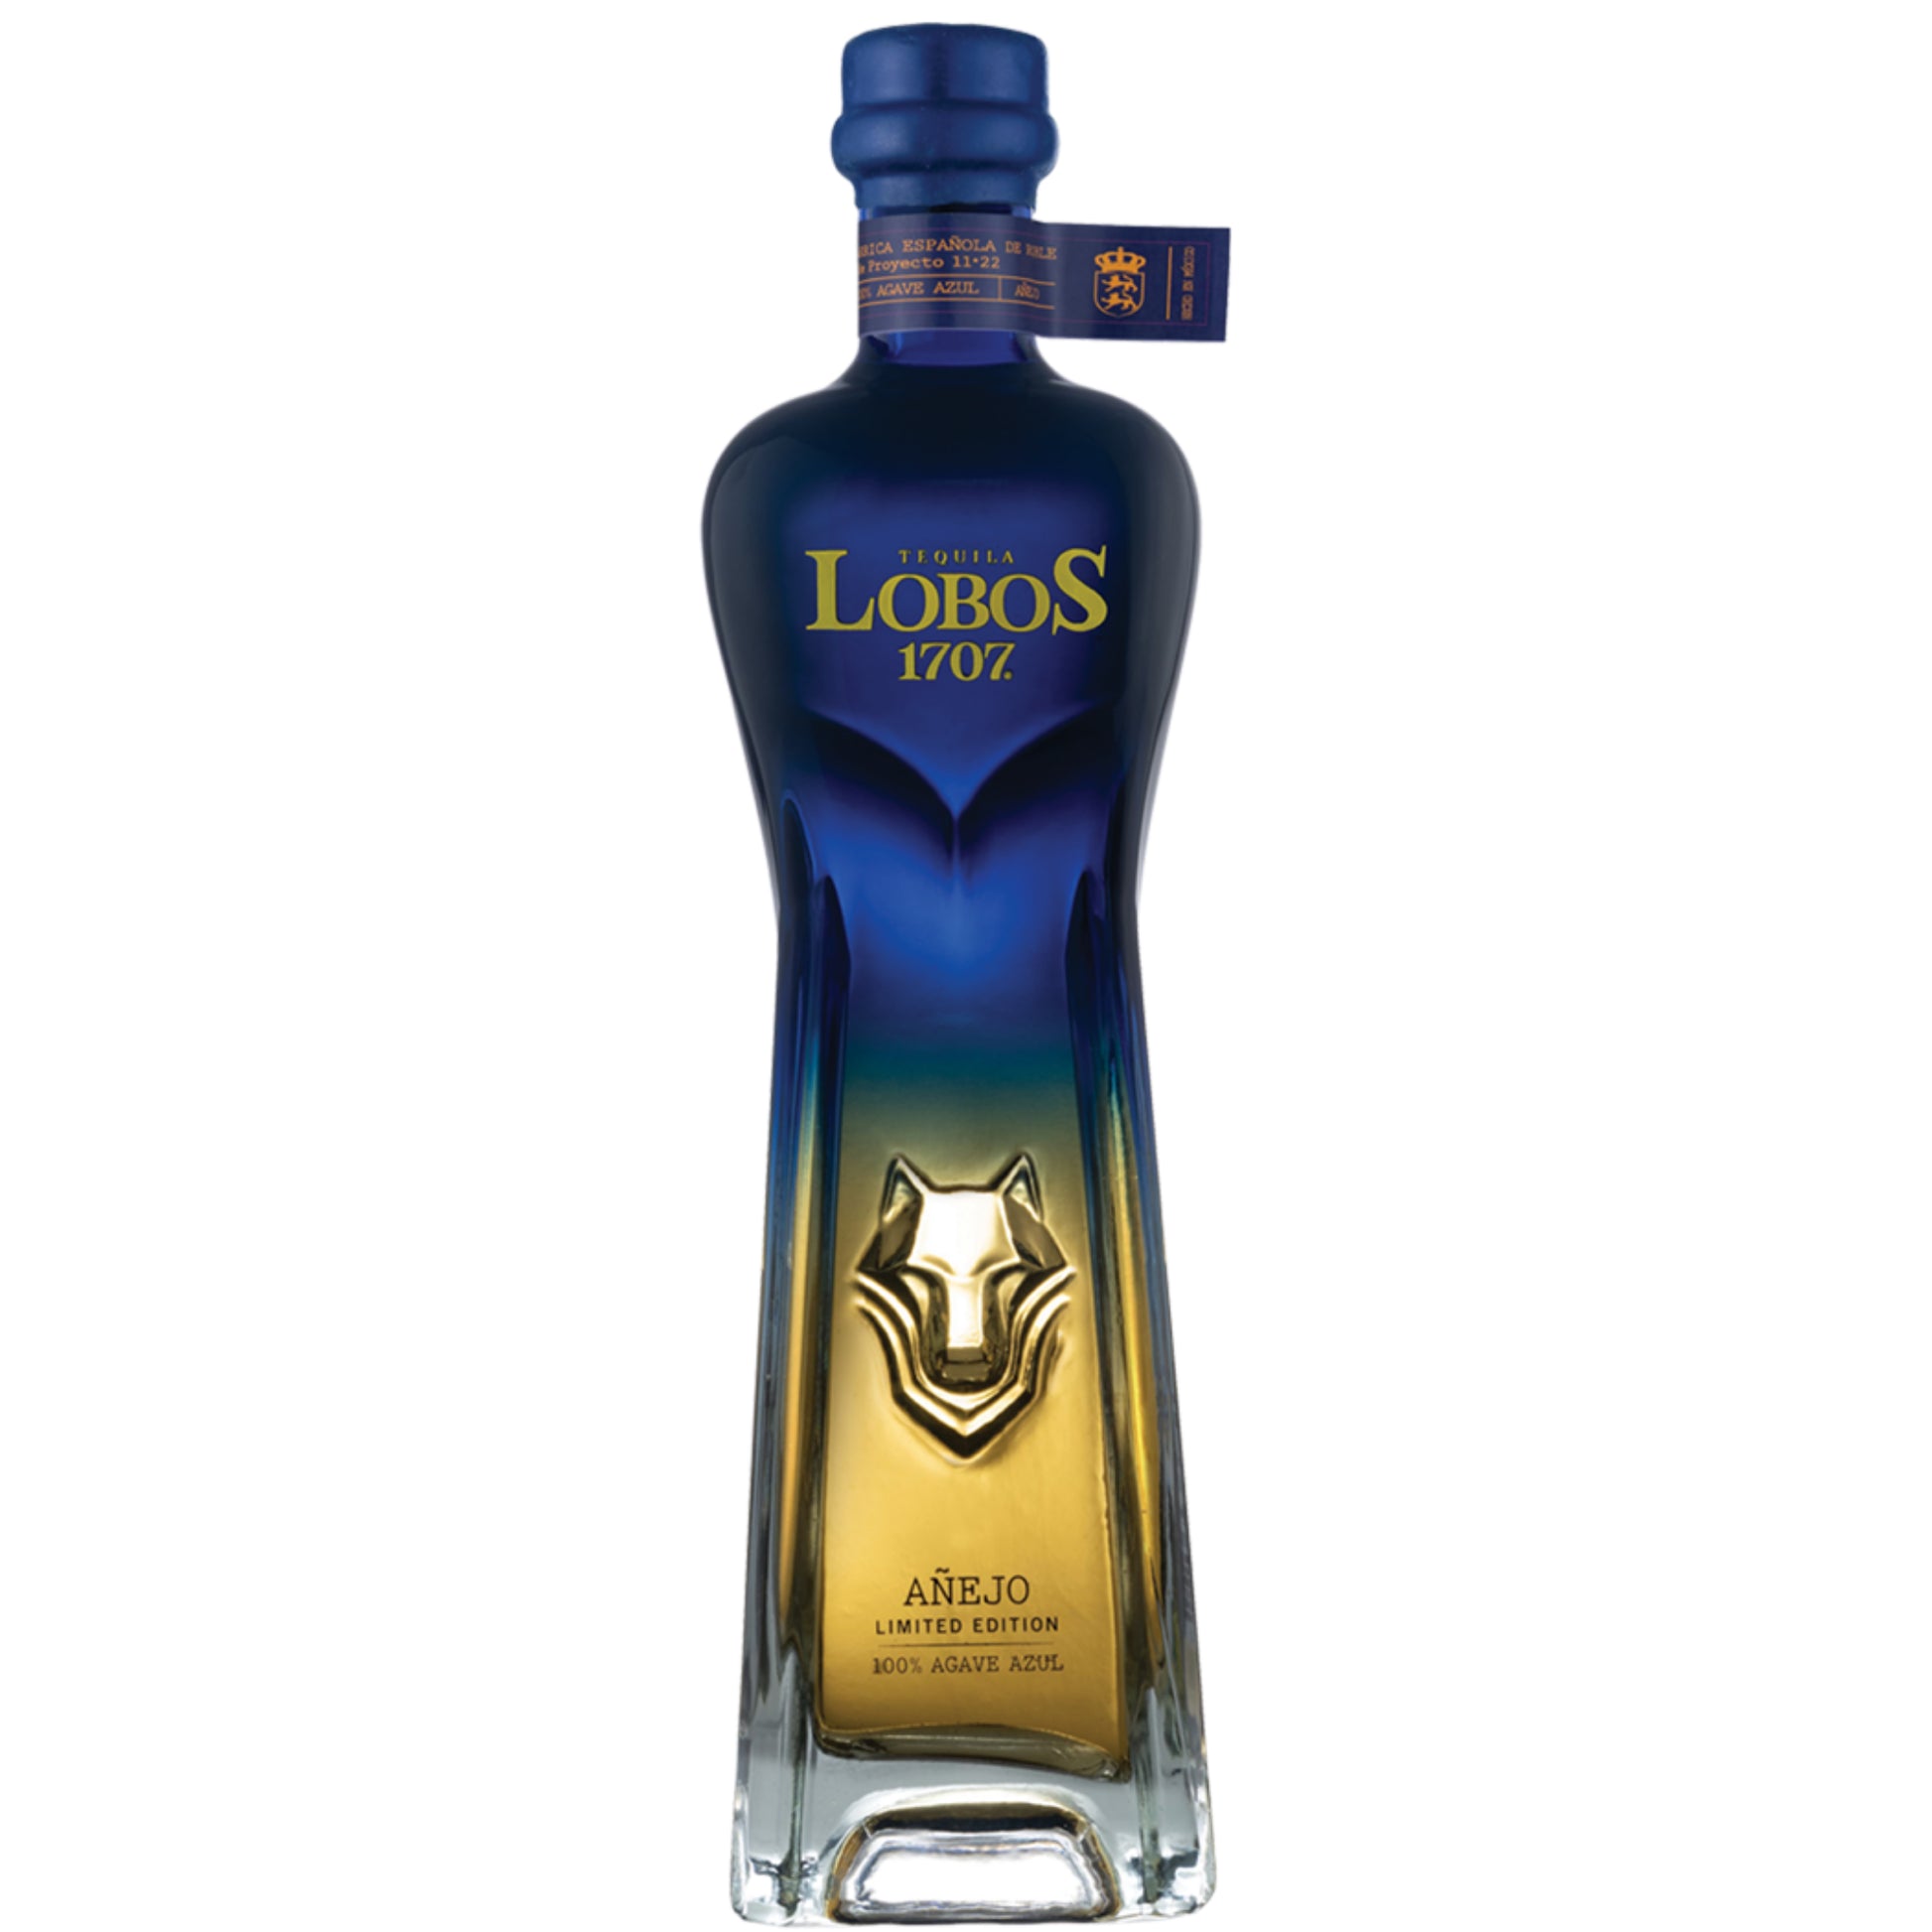 Lobos 1707 Tequila Anejo Limited Edition - Liquor Geeks